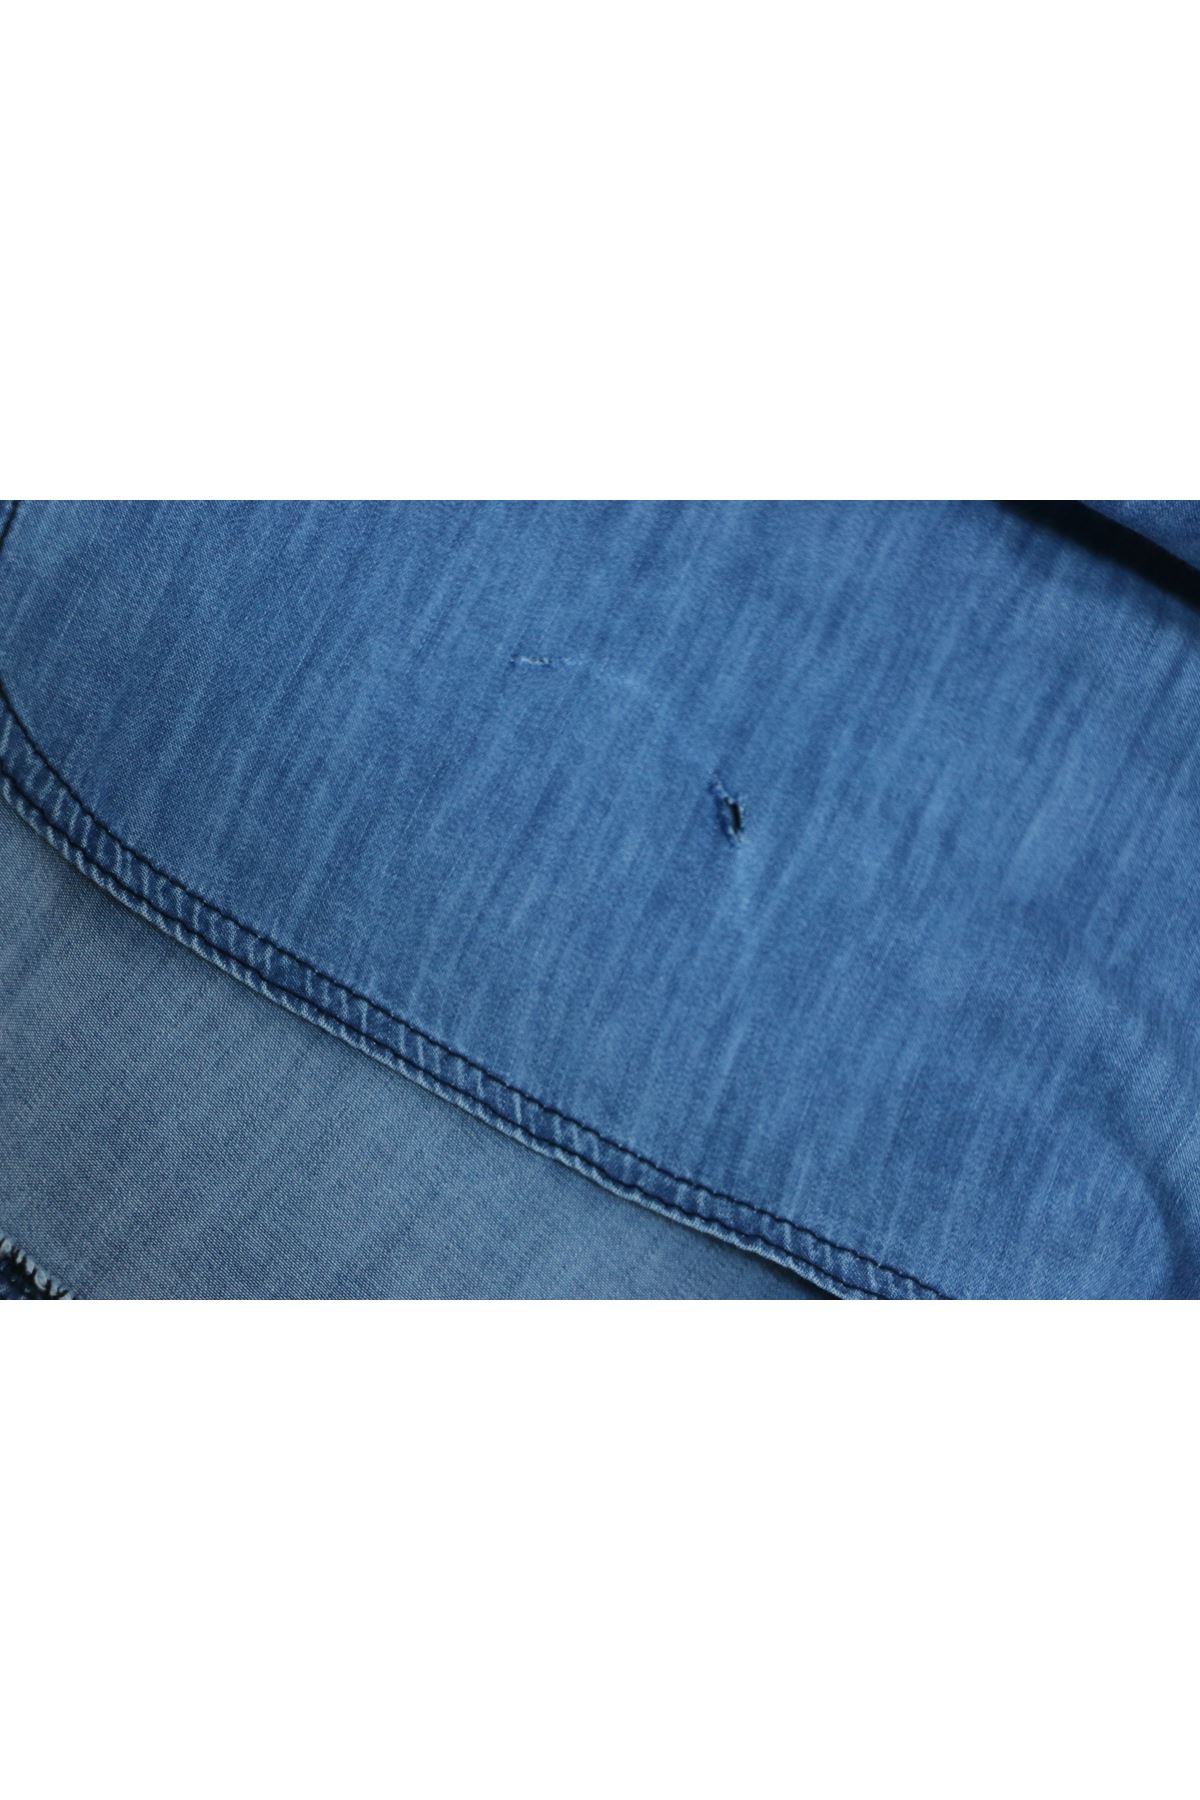 D-9182-2 Büyük Beden Beli Lastikli Bol Paça Defolu Kot Pantolon - Buz Mavi